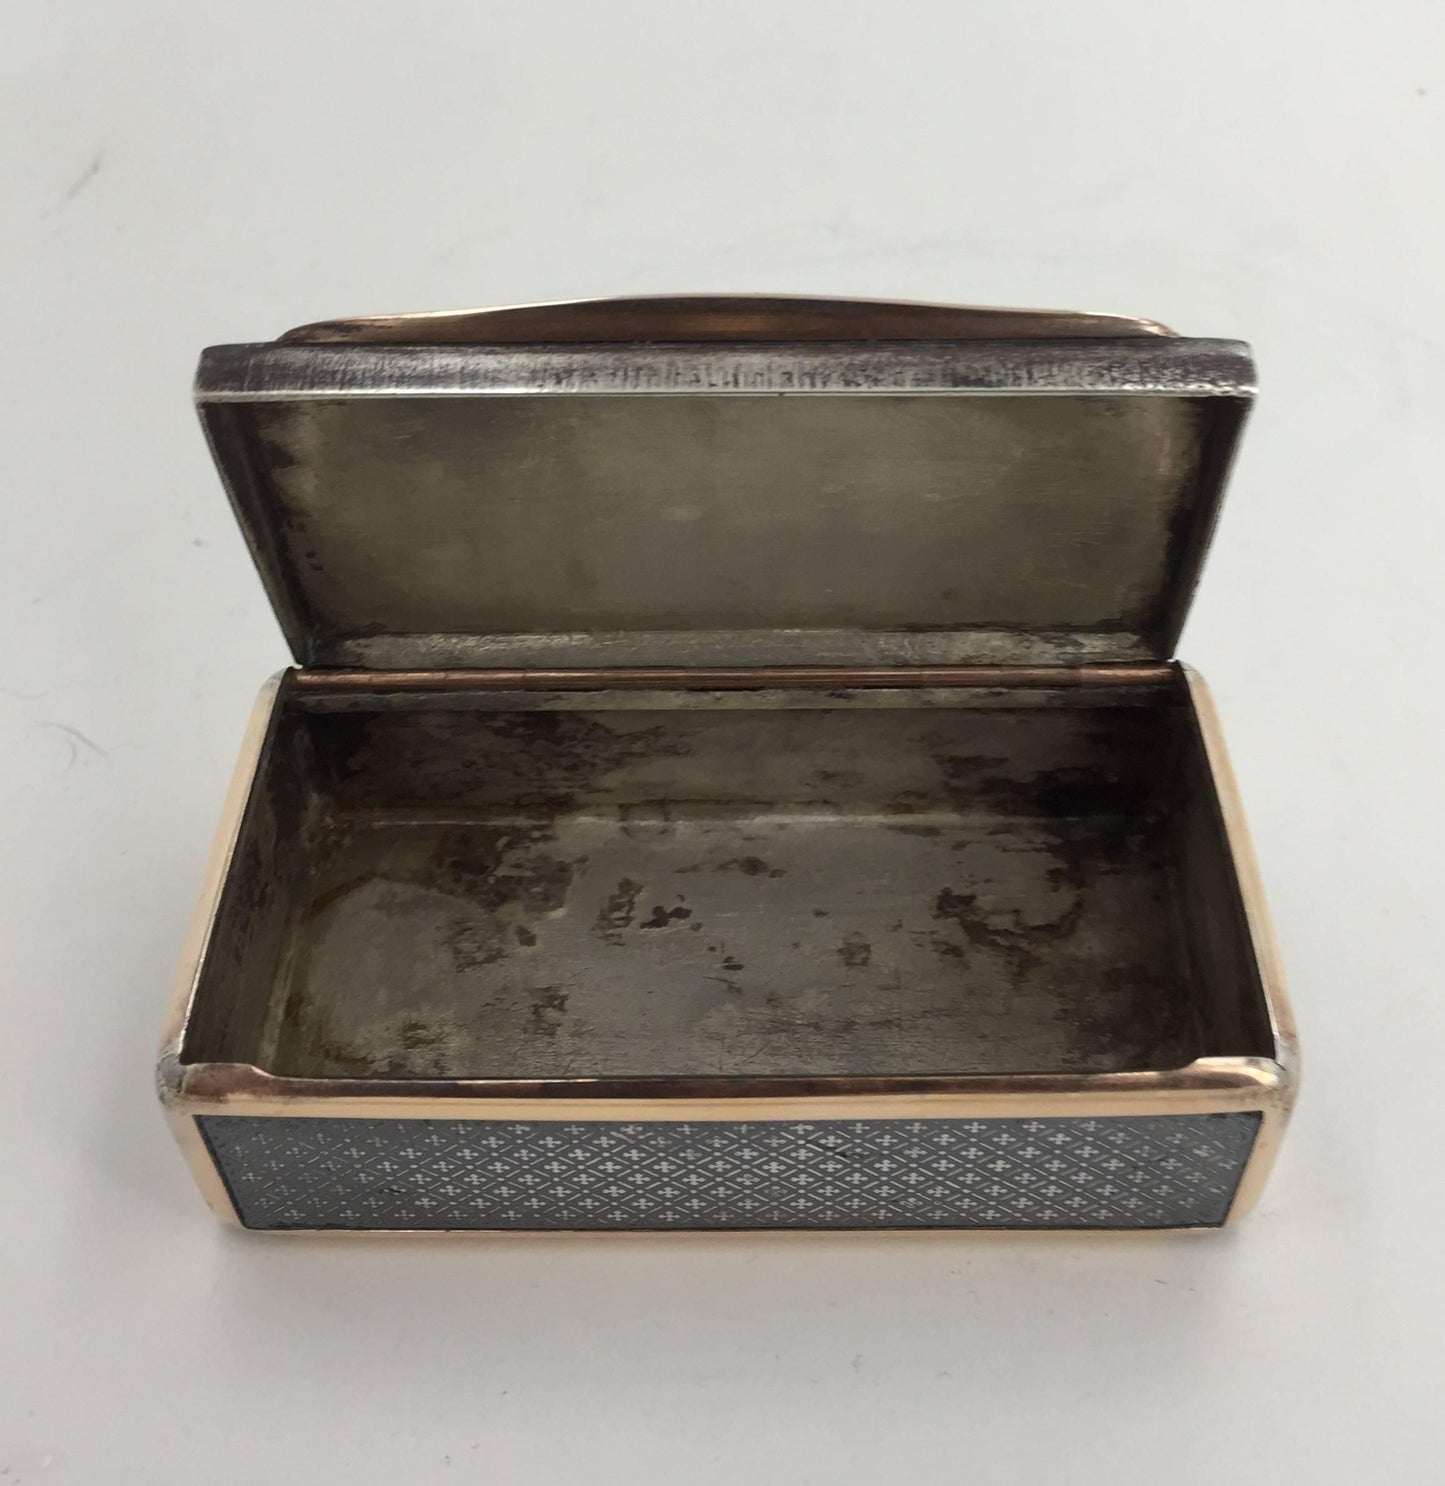 Continental Niello and Silver Gilt Snuff Box, Early 19th Century